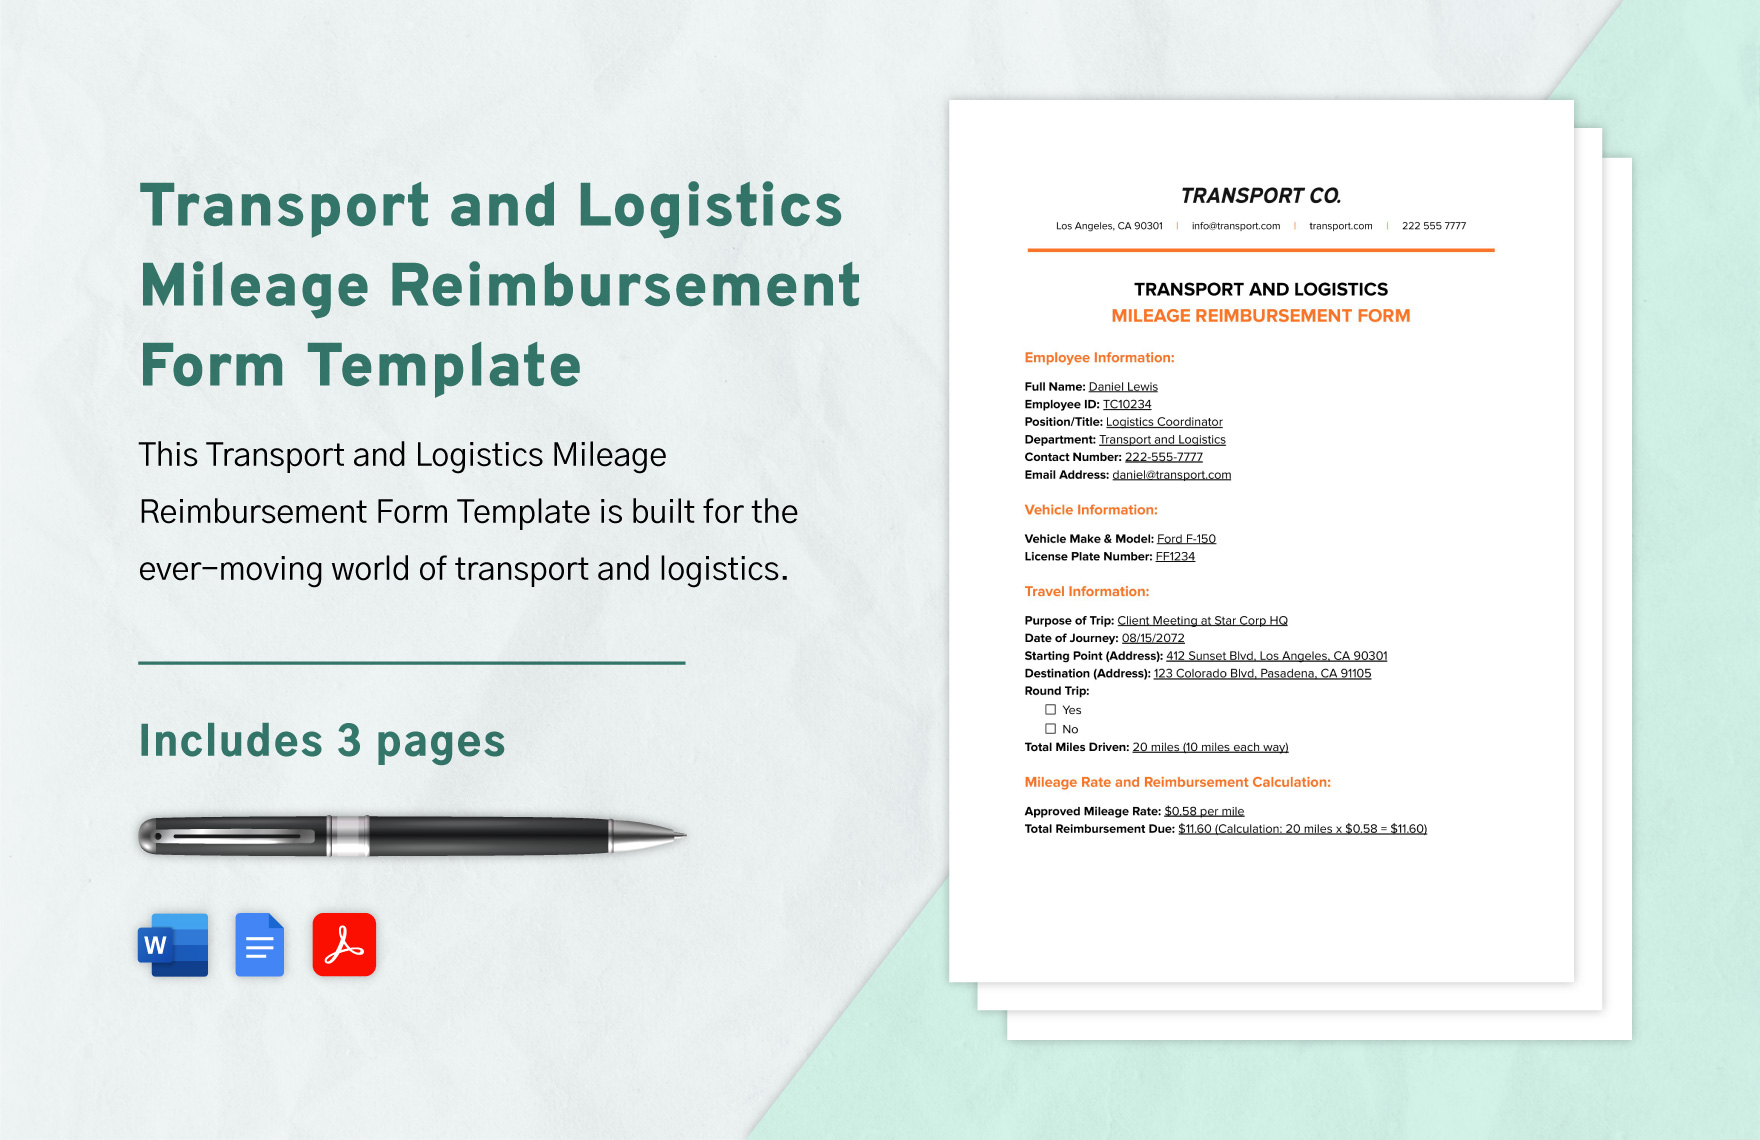 Transport and Logistics Mileage Reimbursement Form Template in Word, Google Docs, PDF